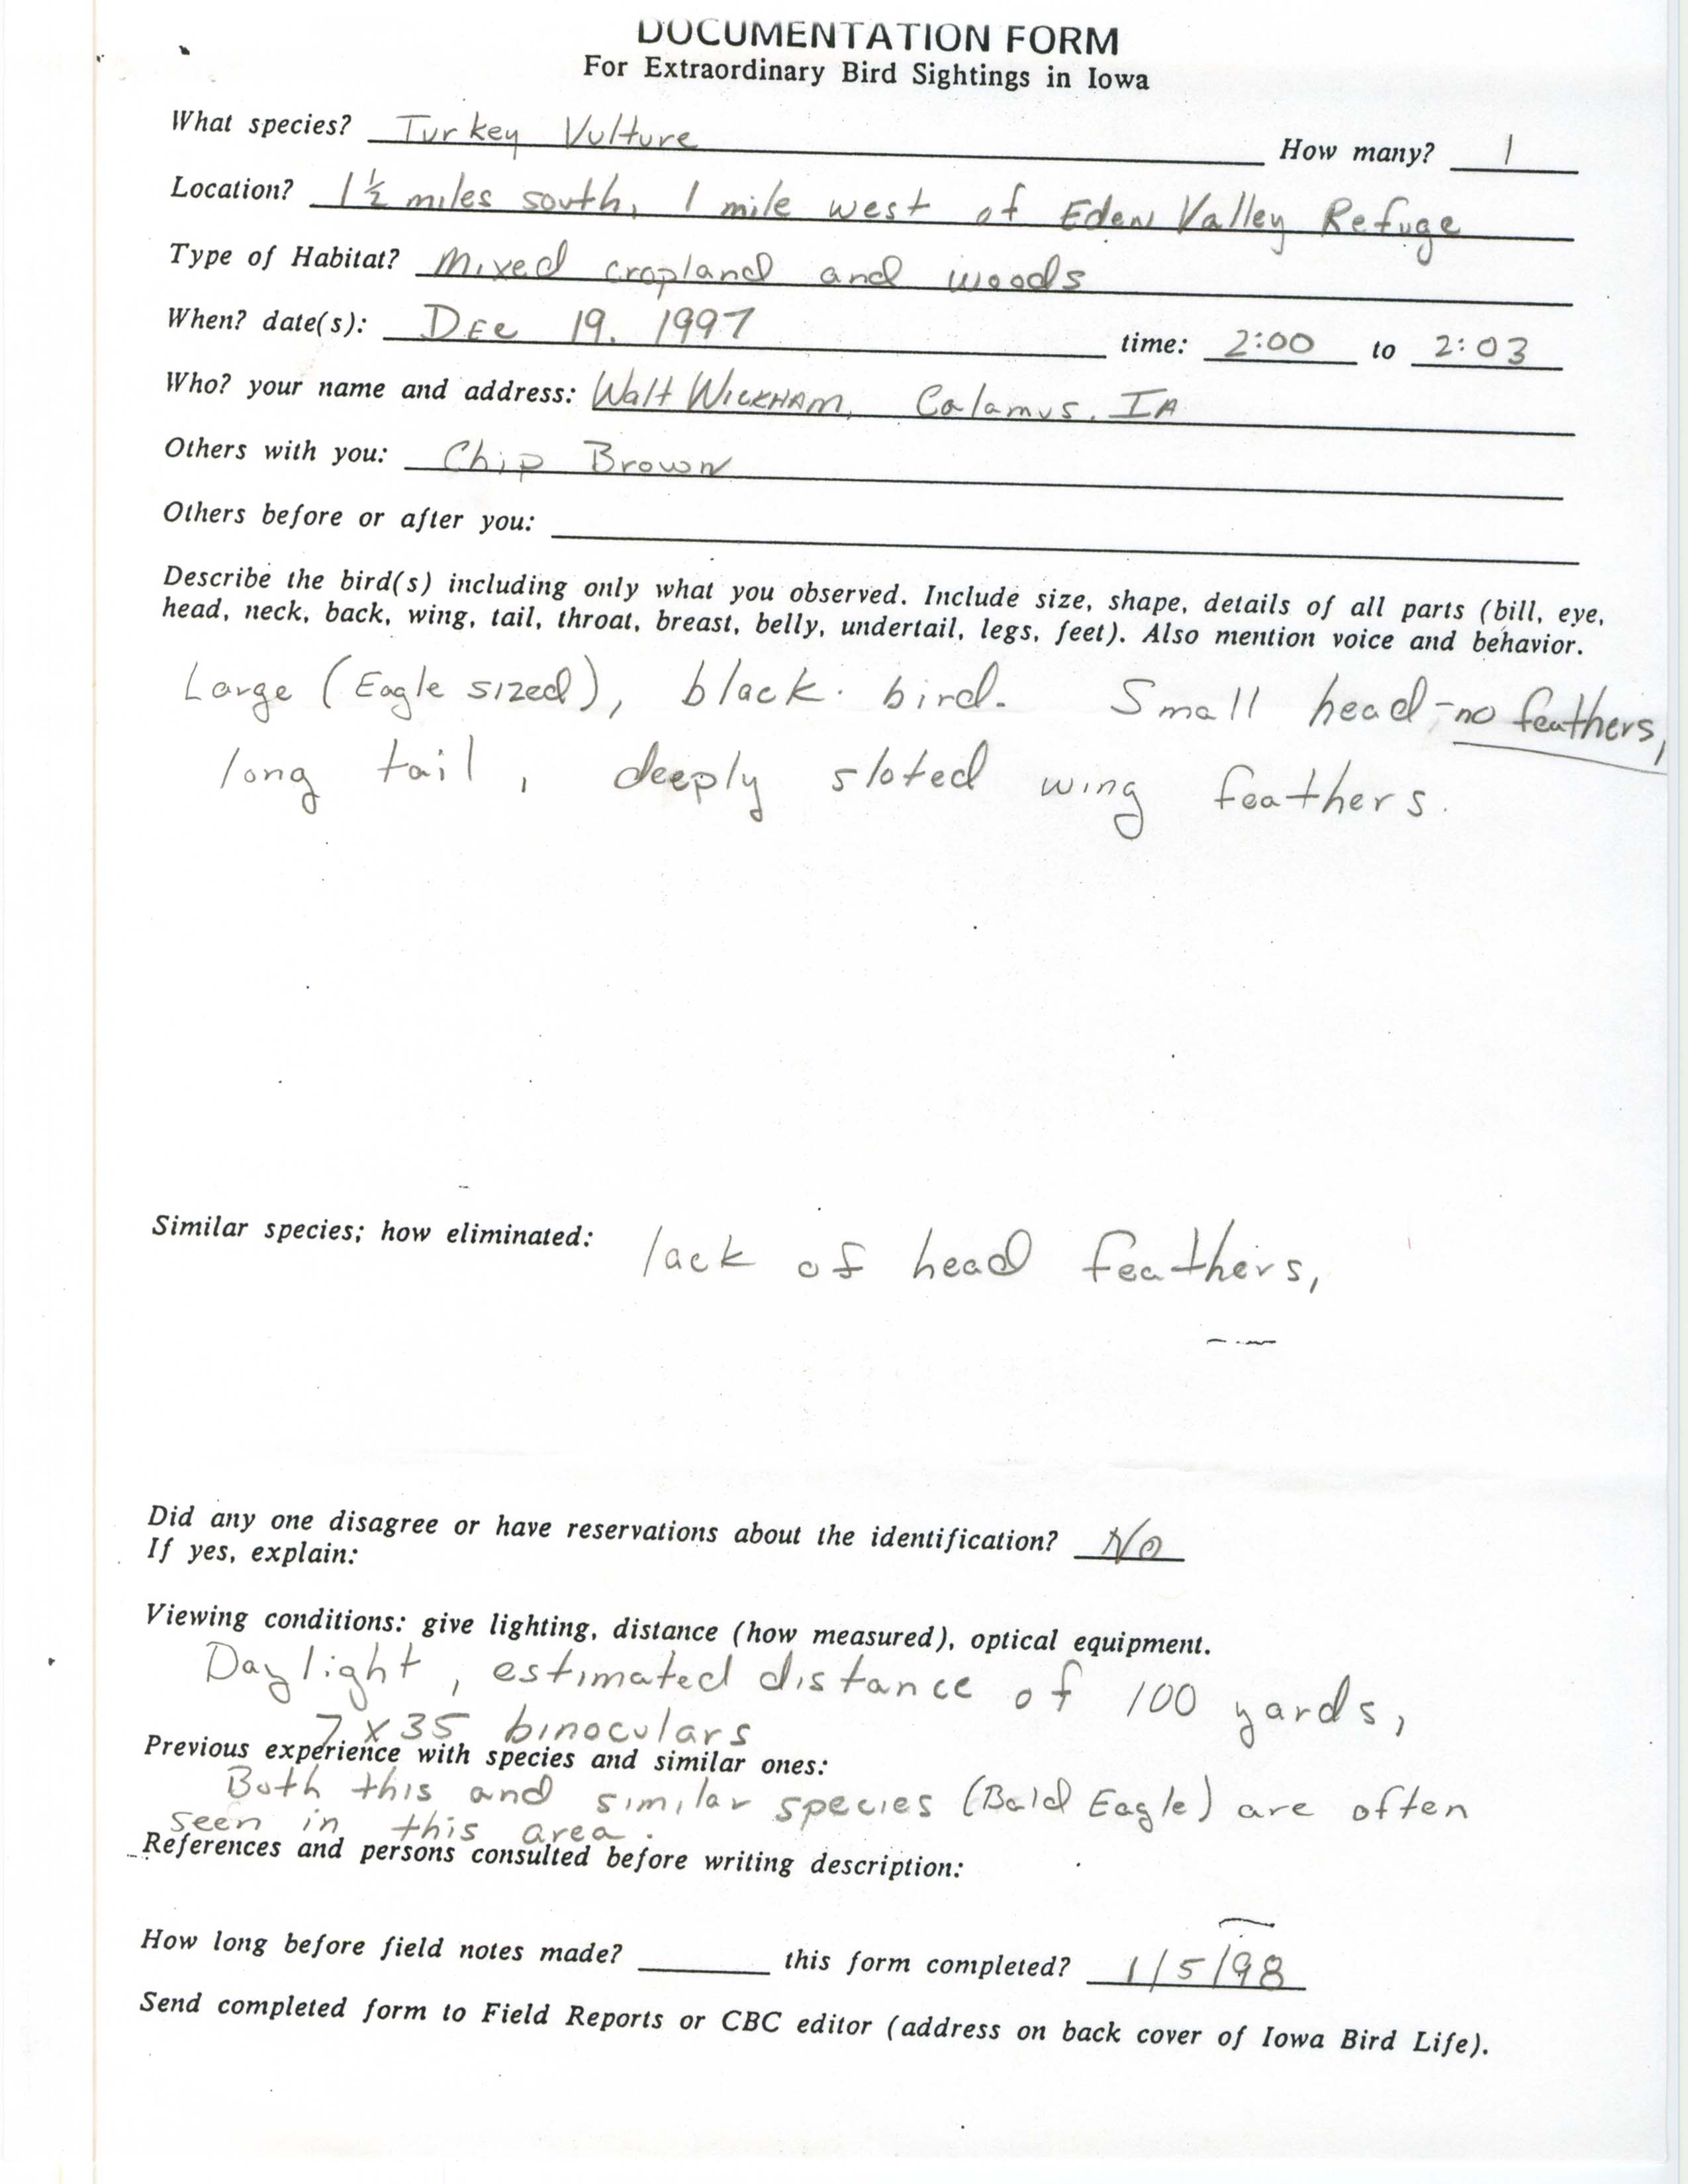 Rare bird documentation form for Turkey Vulture at Eden Valley Refuge, 1997